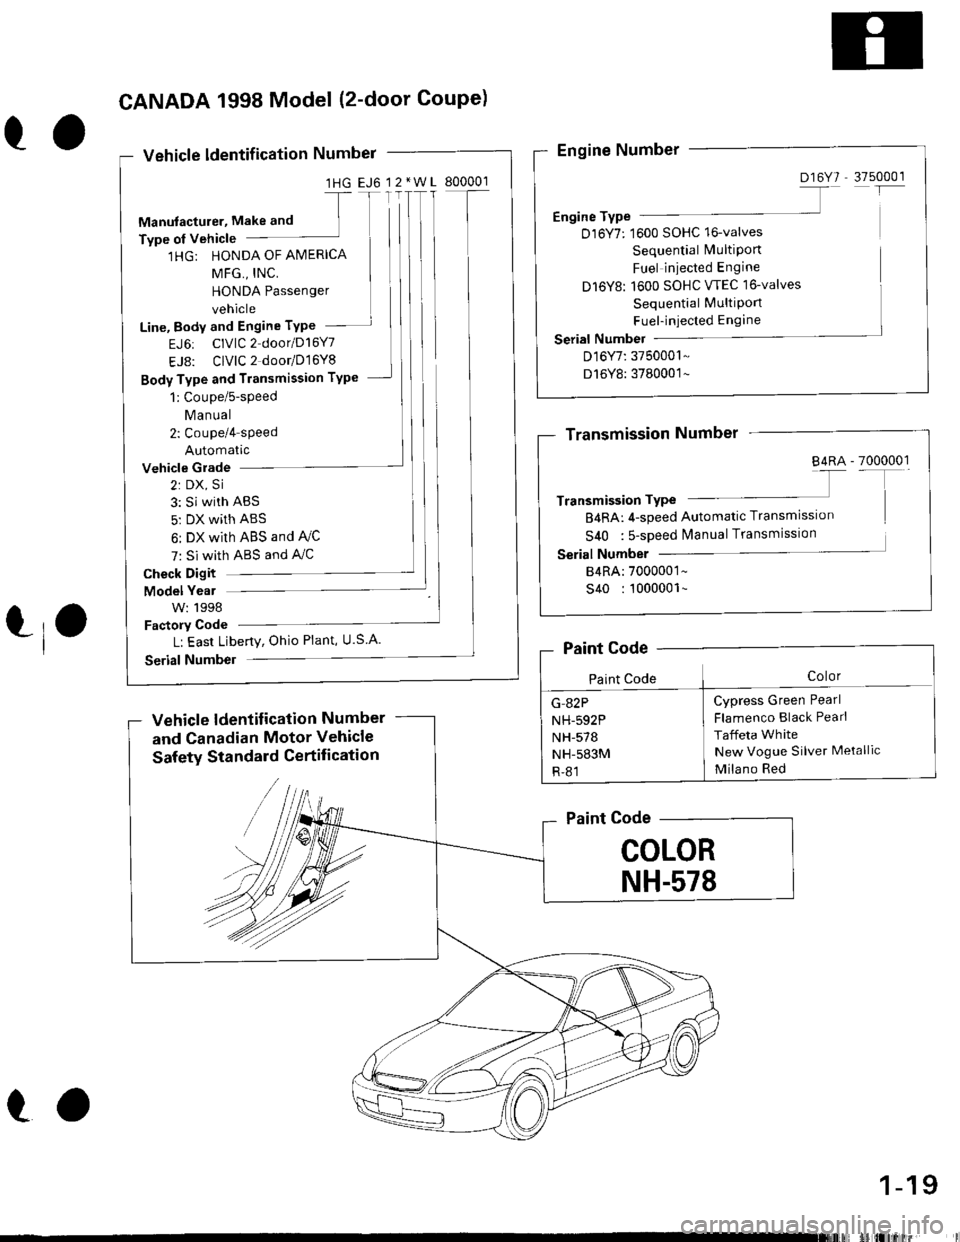 HONDA CIVIC 1997 6.G Workshop Manual Vehicle ldentif ication Numbel
1HG EJ6 12*W
1HG: HONDA OF AMERICA
MFG,, INC,
HONDA Passenger
vehicle
Line, Body and Engine TYPe
EJ6: CIVIC 2 door/D16Y7
EJ8: CIVIC 2 dootD16Y8
Body Type and Transmissio